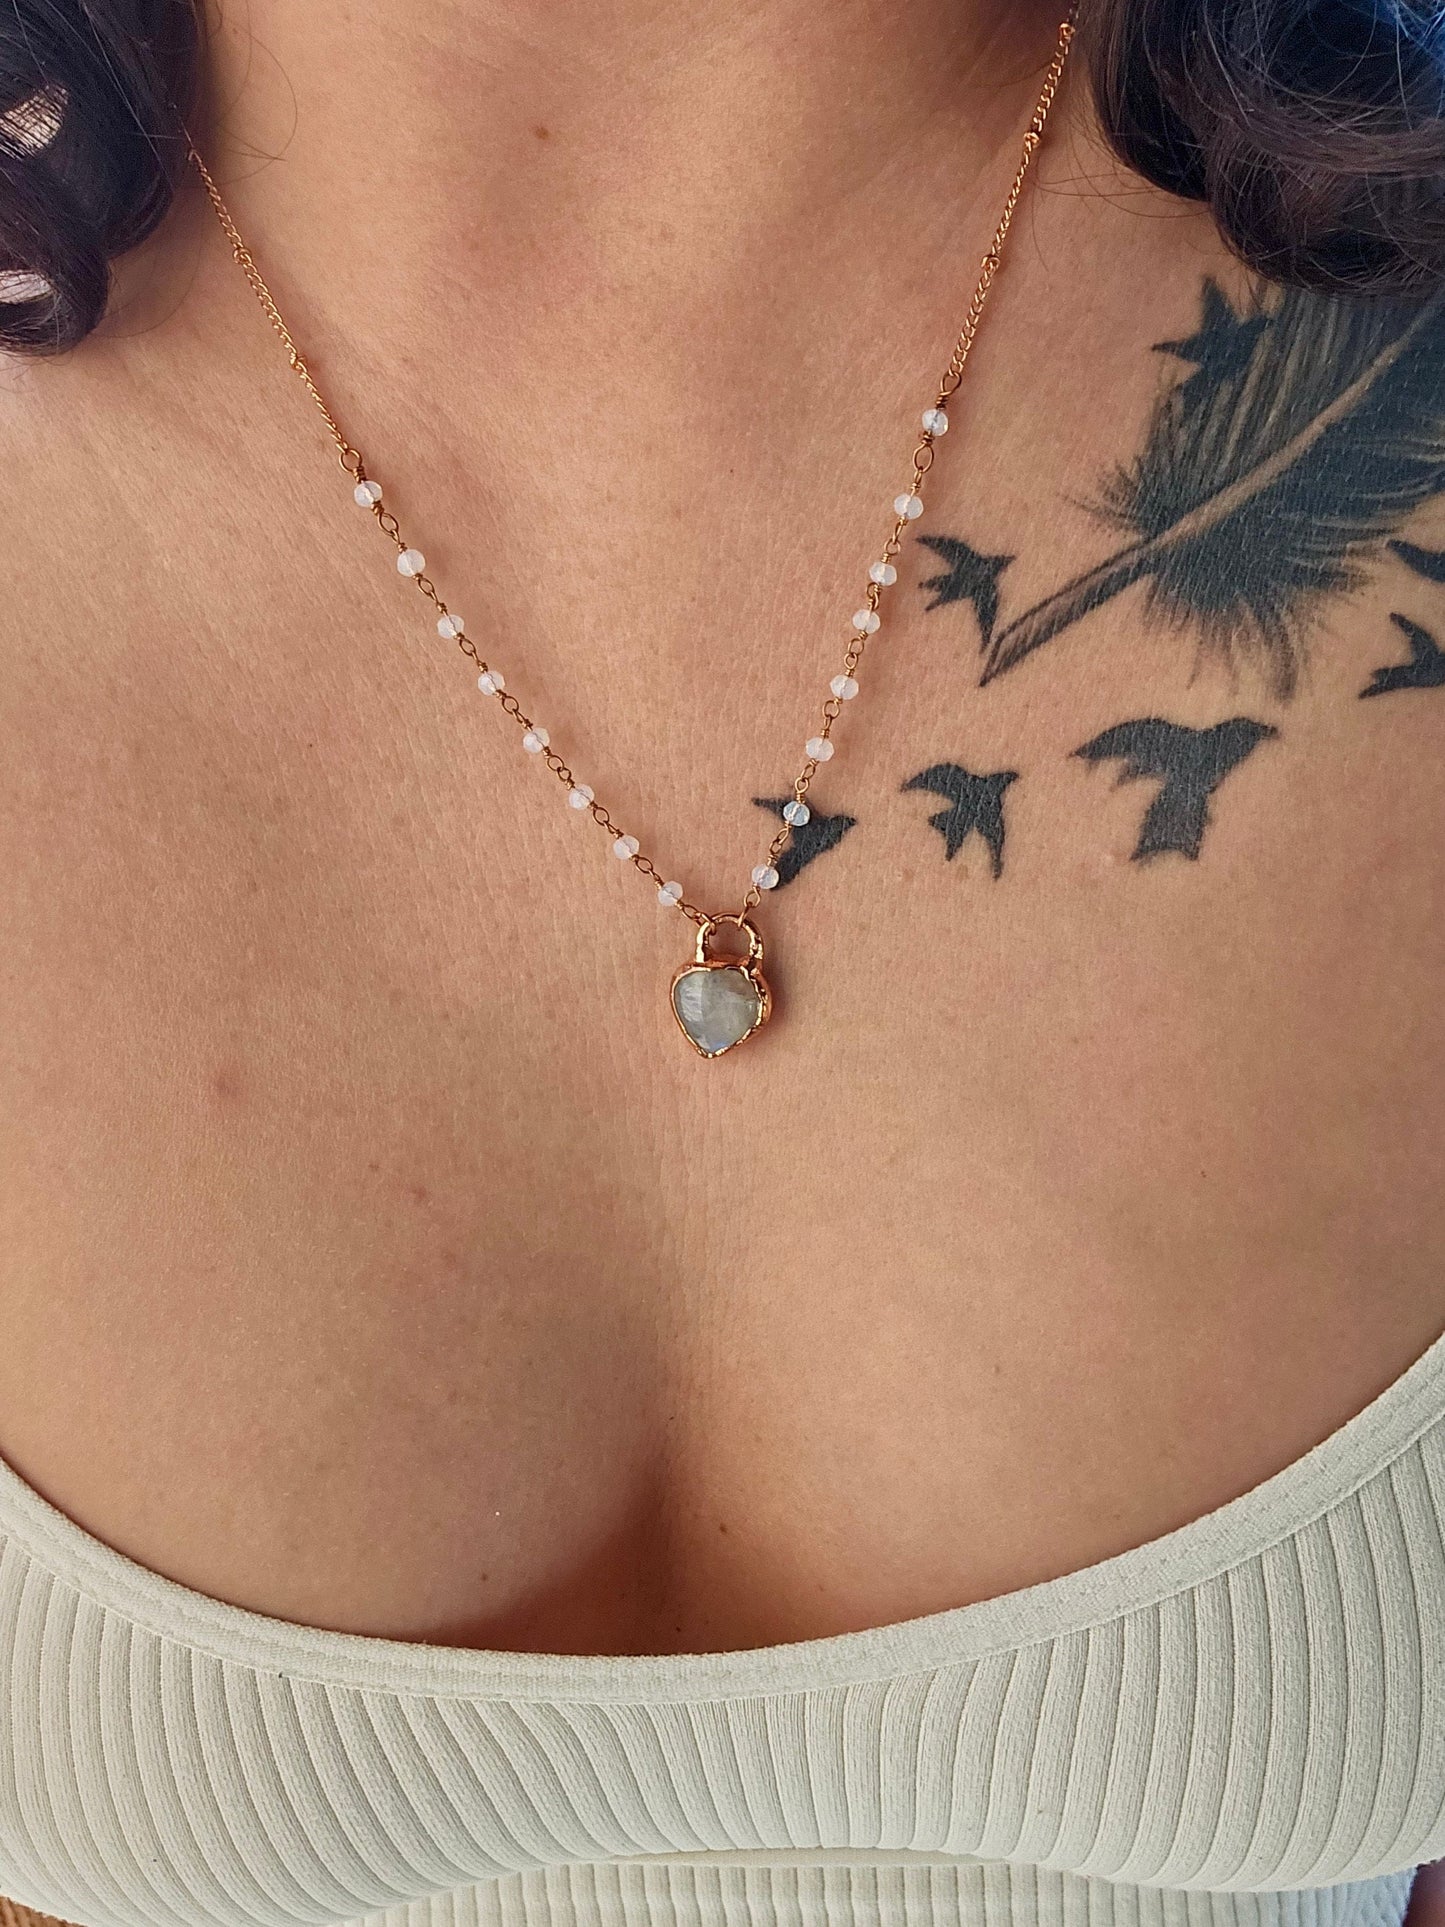 Moonstone Necklace in Rose Gold, Copper Electroformed Heart Shaped Gemstone Pendant